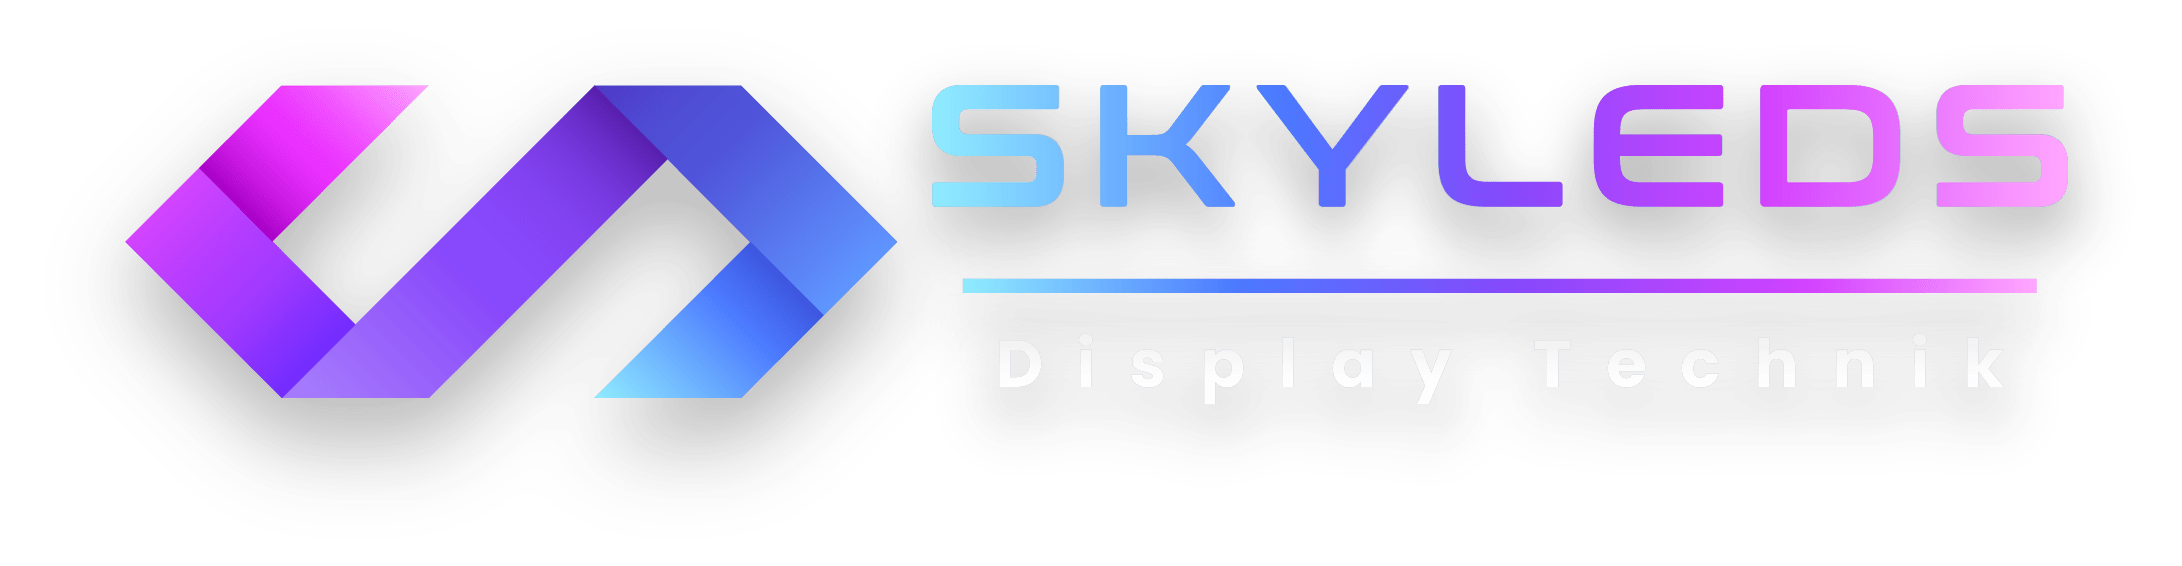 Skyleds Display Technik